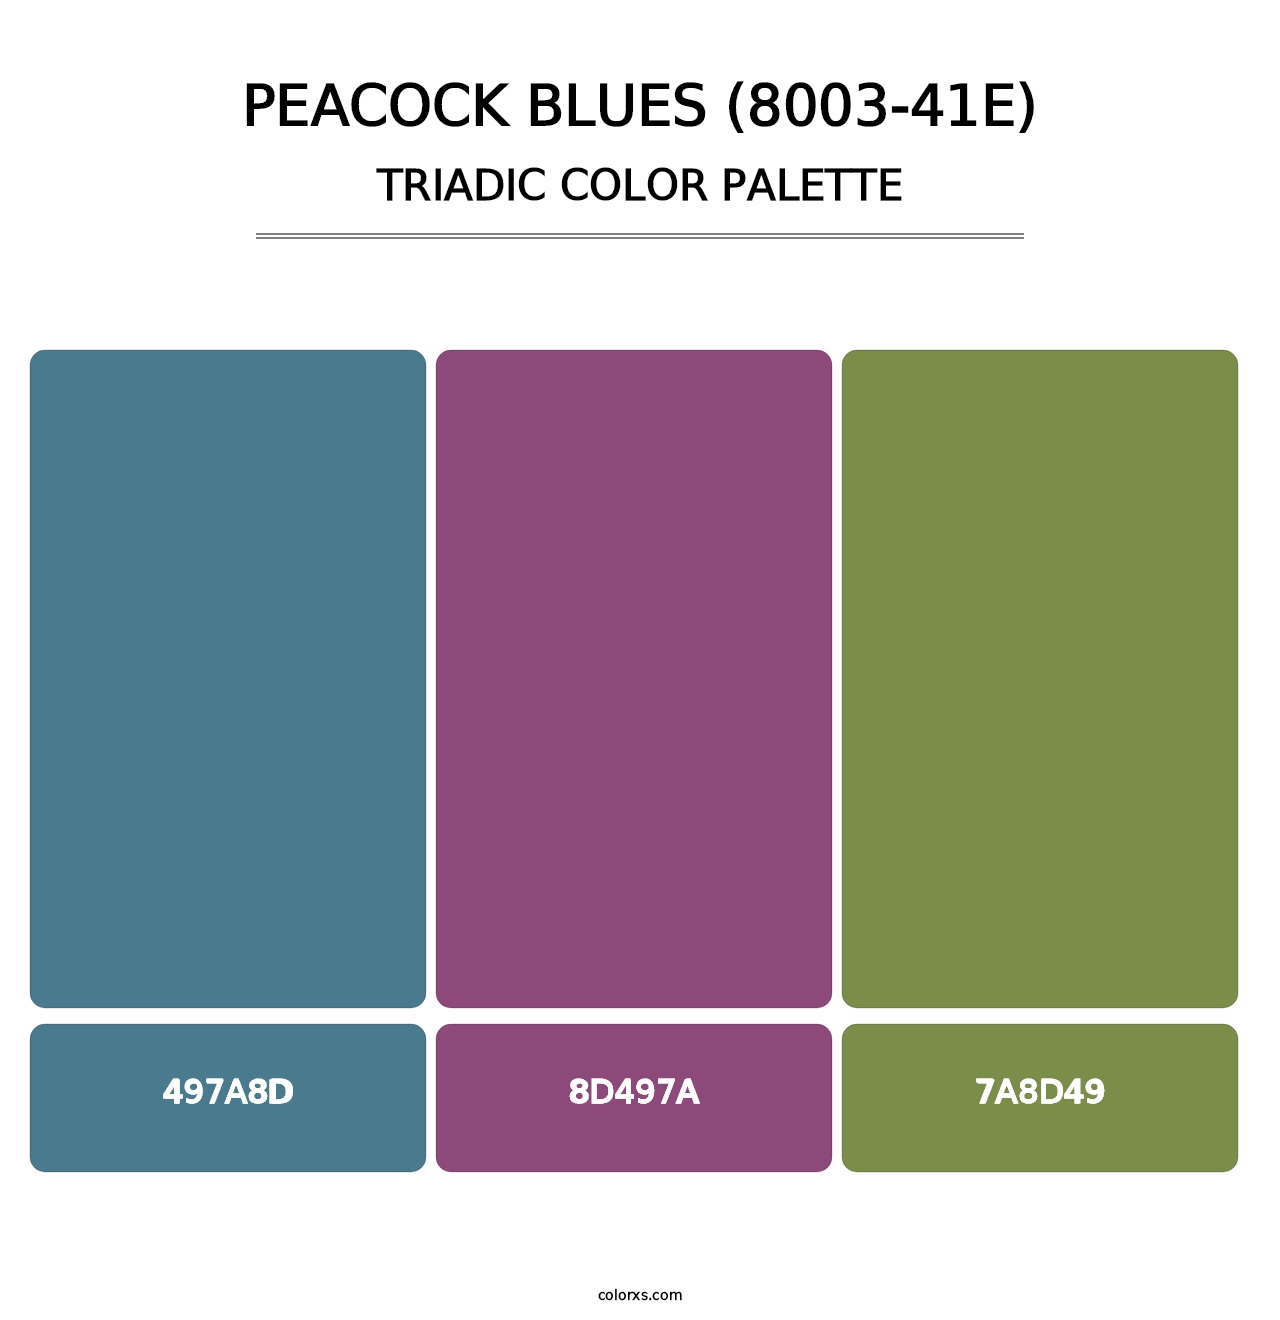 Peacock Blues (8003-41E) - Triadic Color Palette